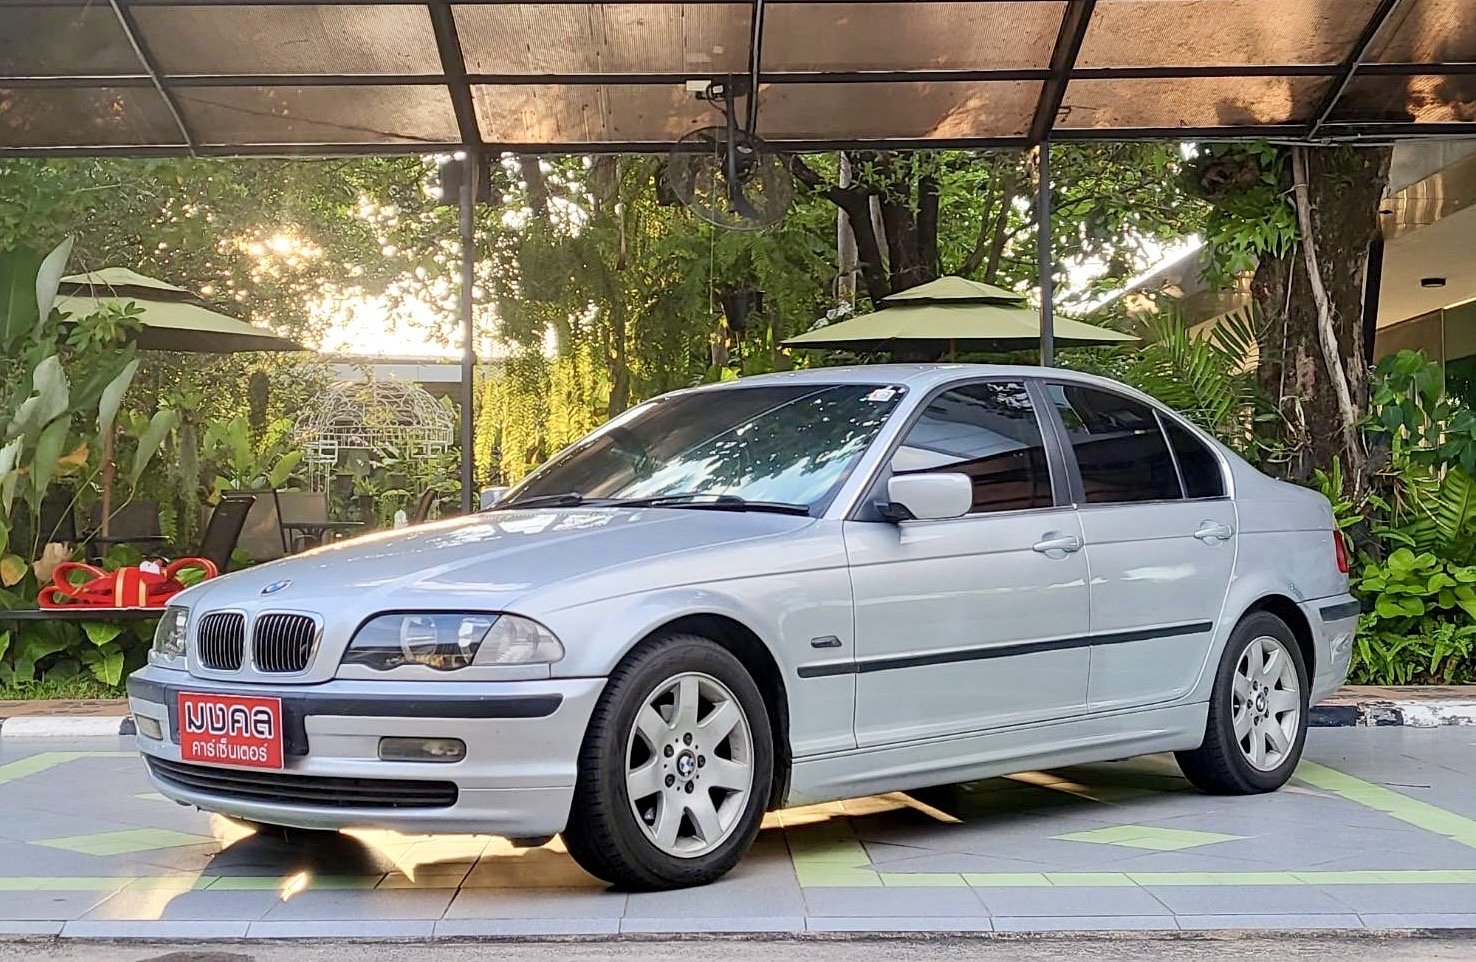 BMW 323i 2.4 E46 A/T 2001 สีเทา (LL0402) 1-2